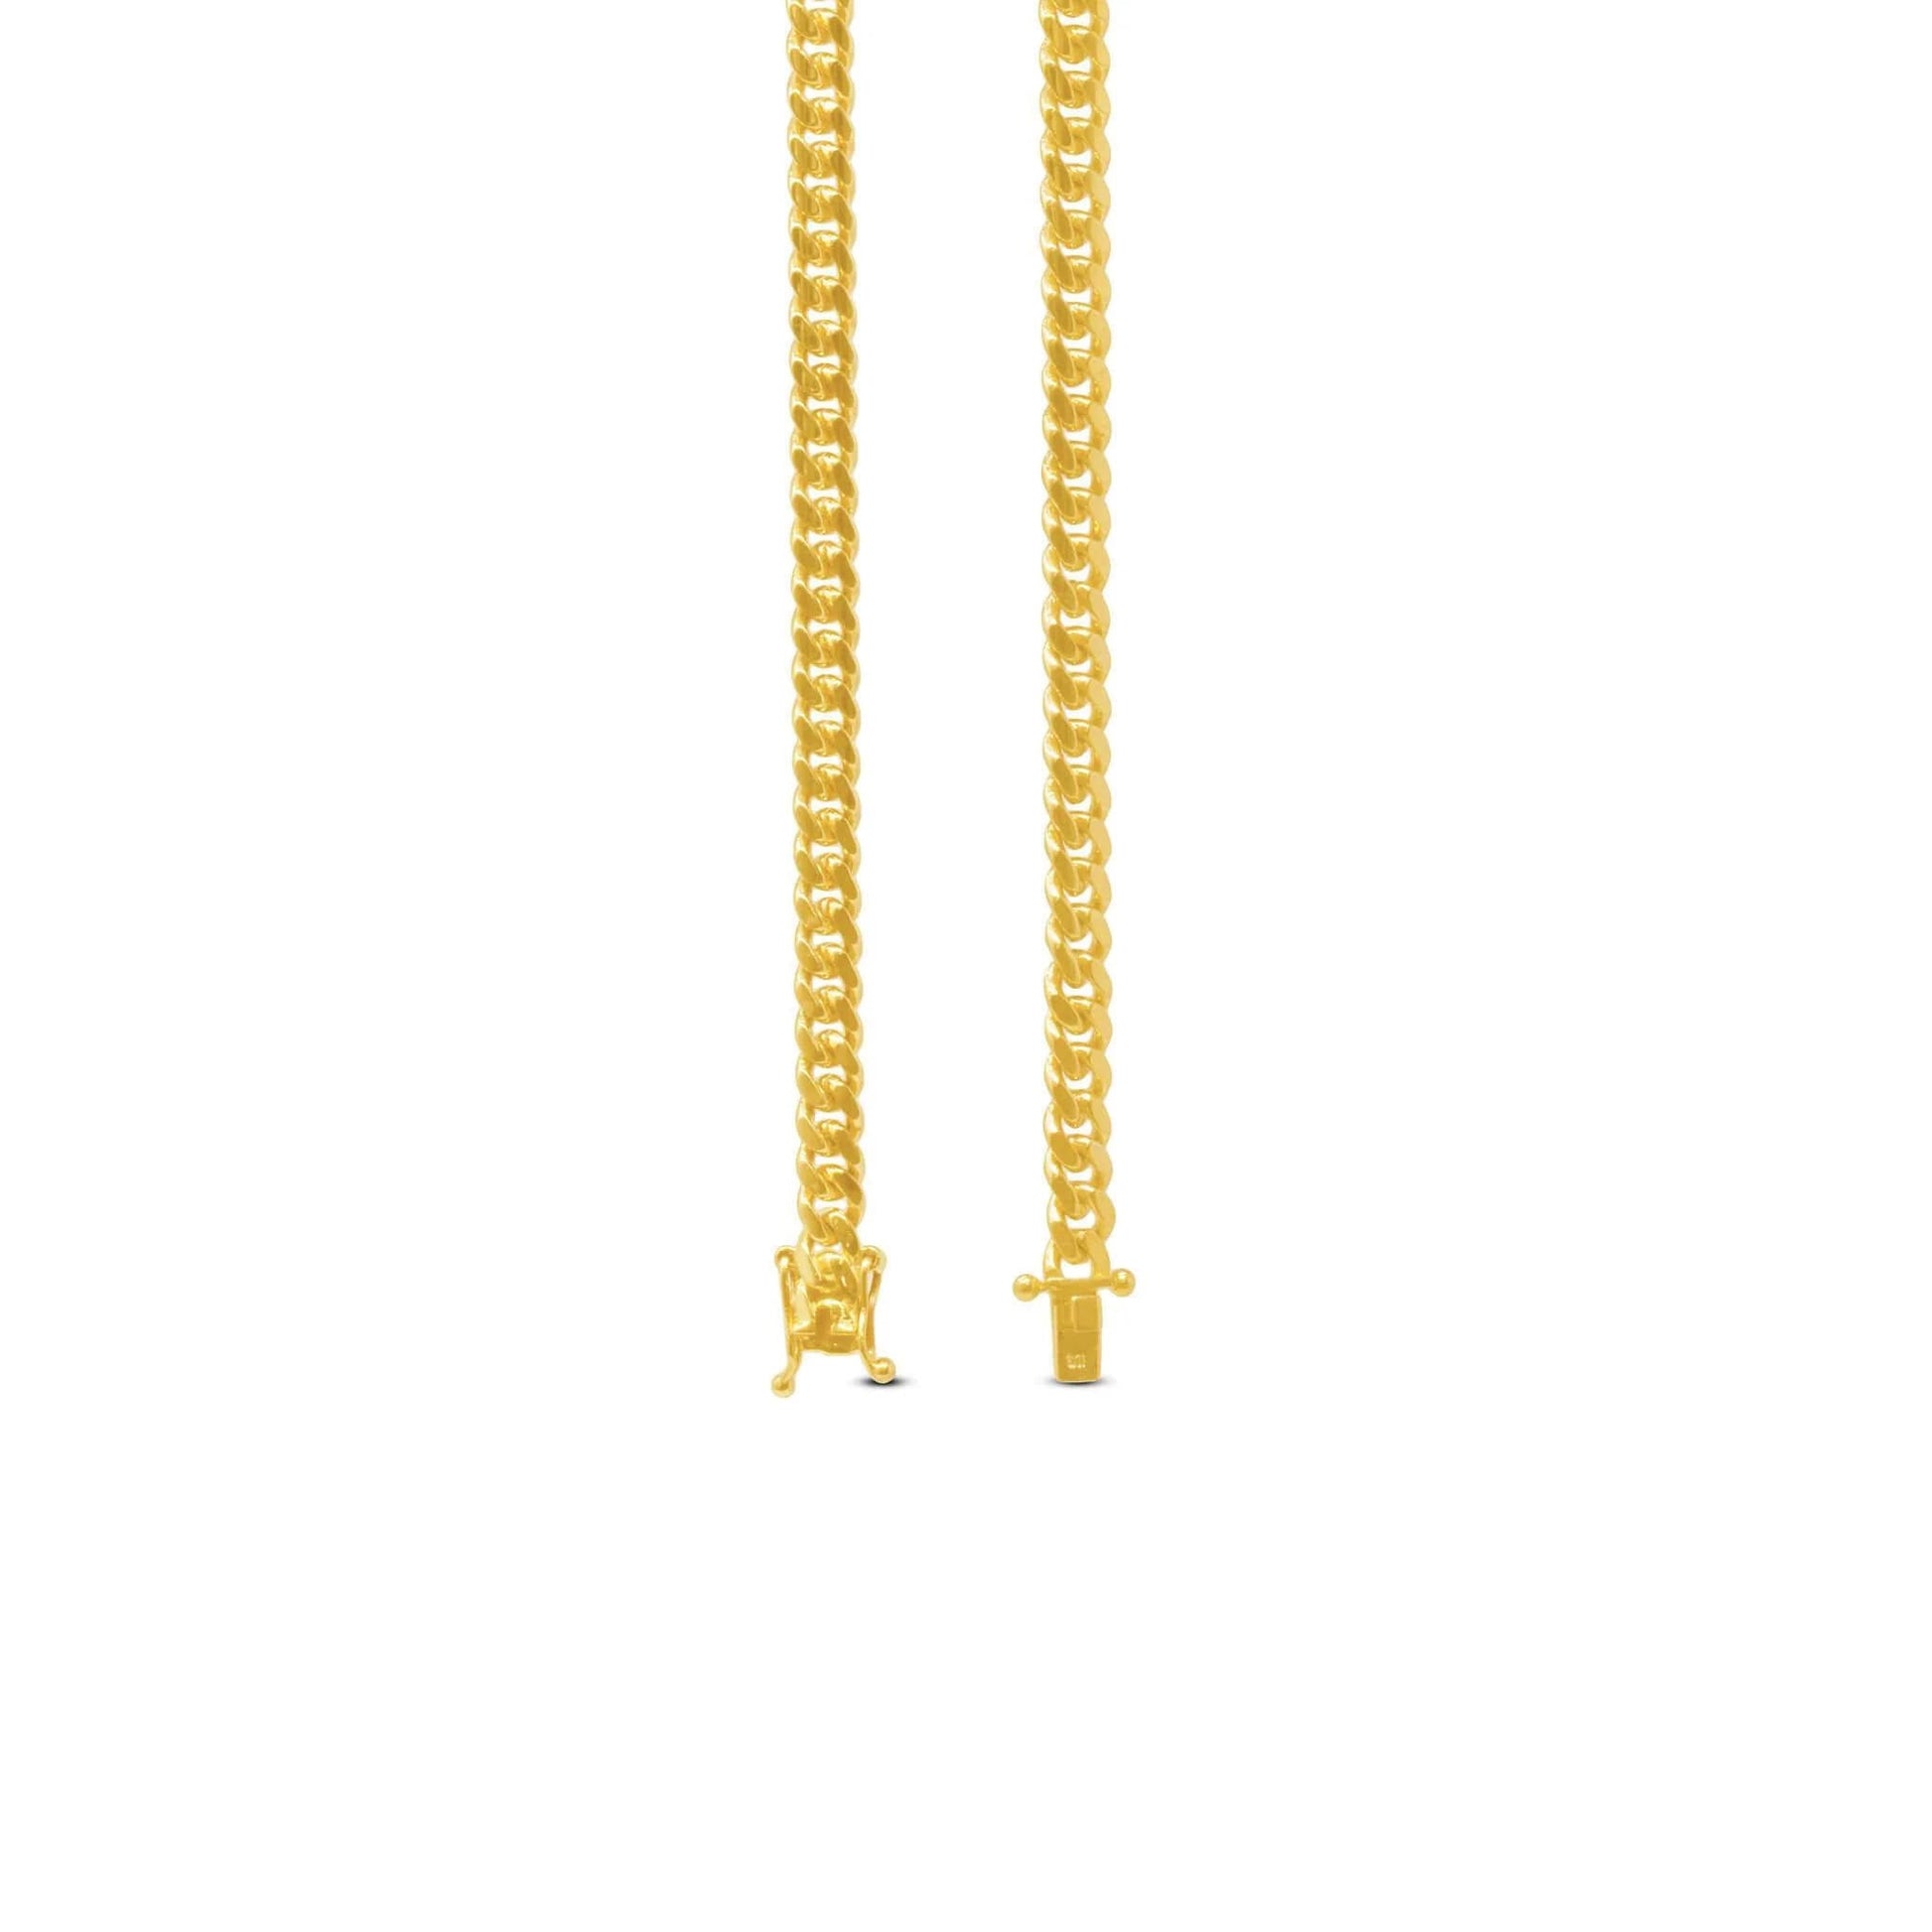 15mm Miami Cuban Link Chain in 10K Solid Yellow Gold - Vera Jewelry in Miami